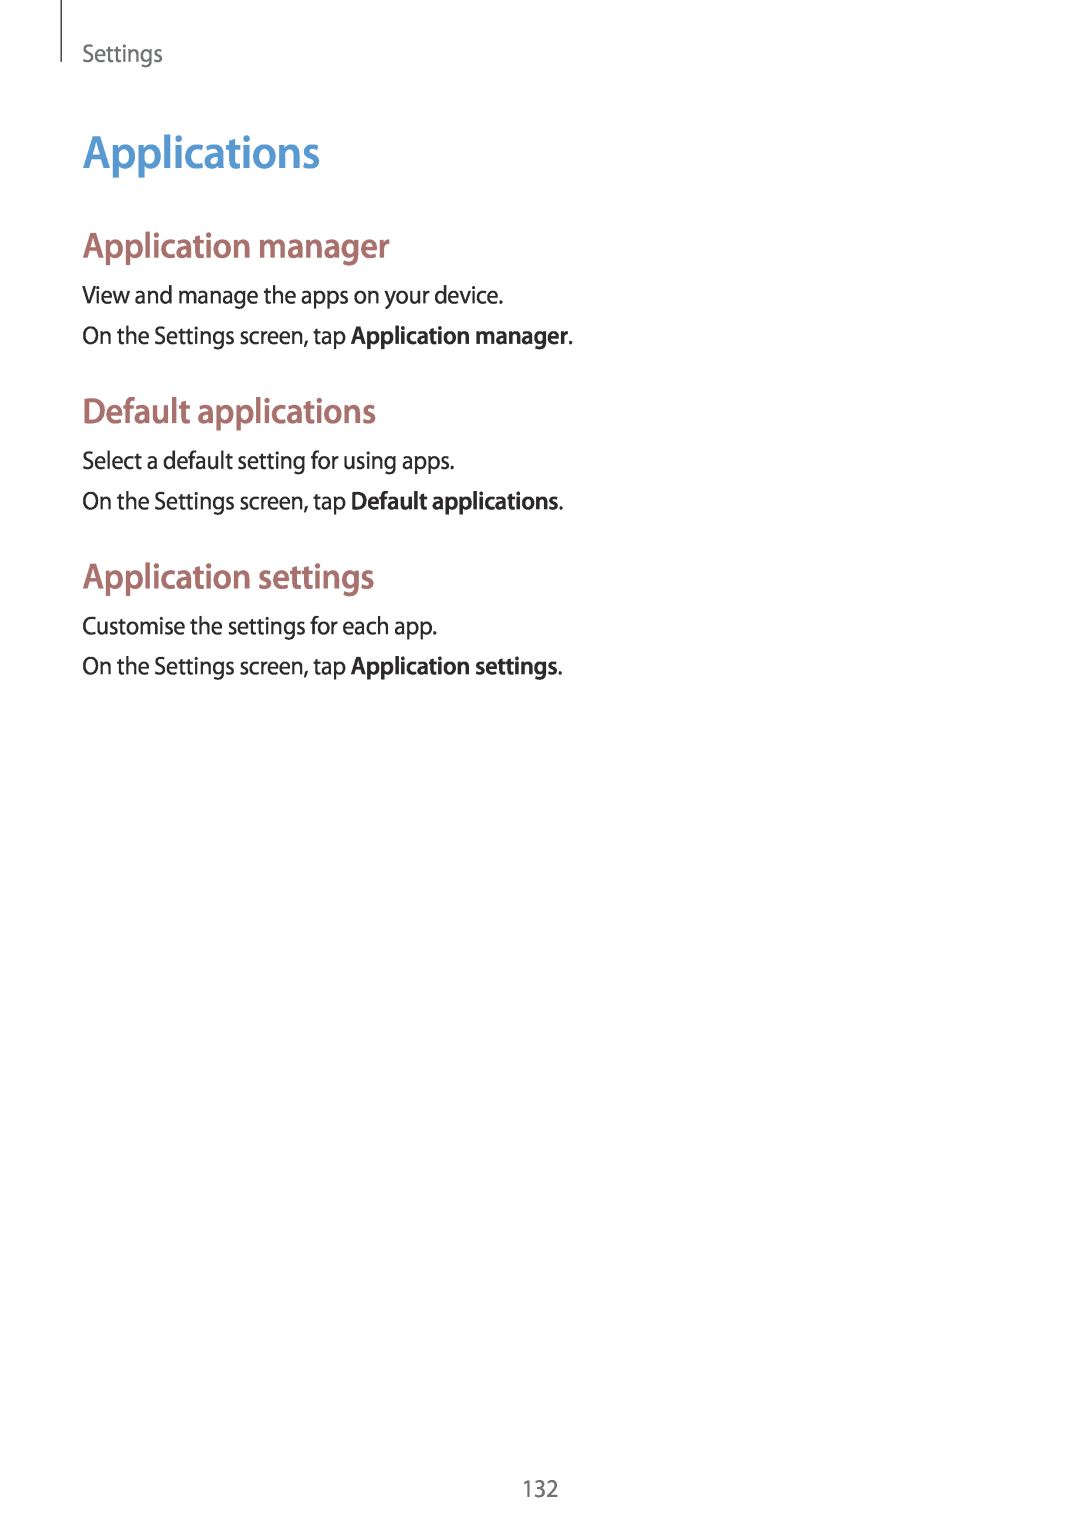 Samsung SM-A700FZKAXEF manual Applications, Application manager, Default applications, Application settings, Settings 